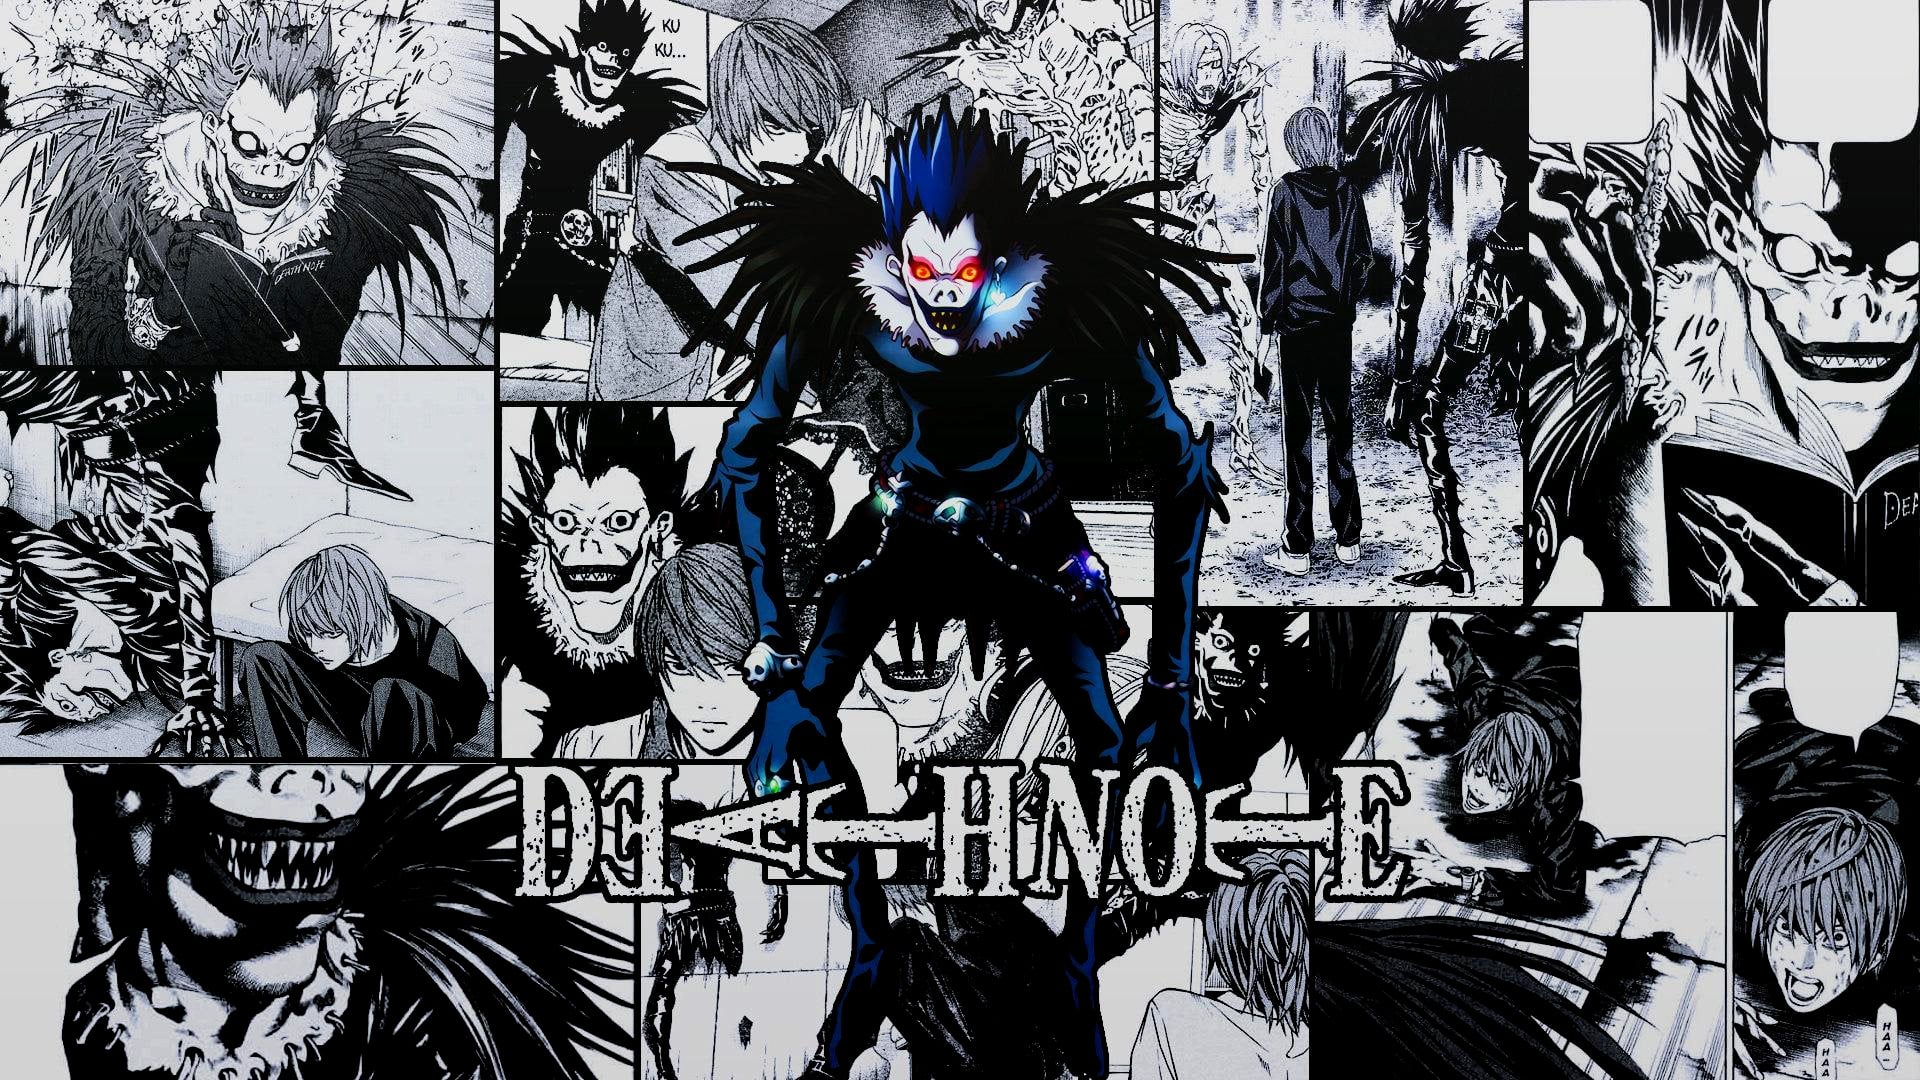 Death Note Rewrite - Il Dio Visionario